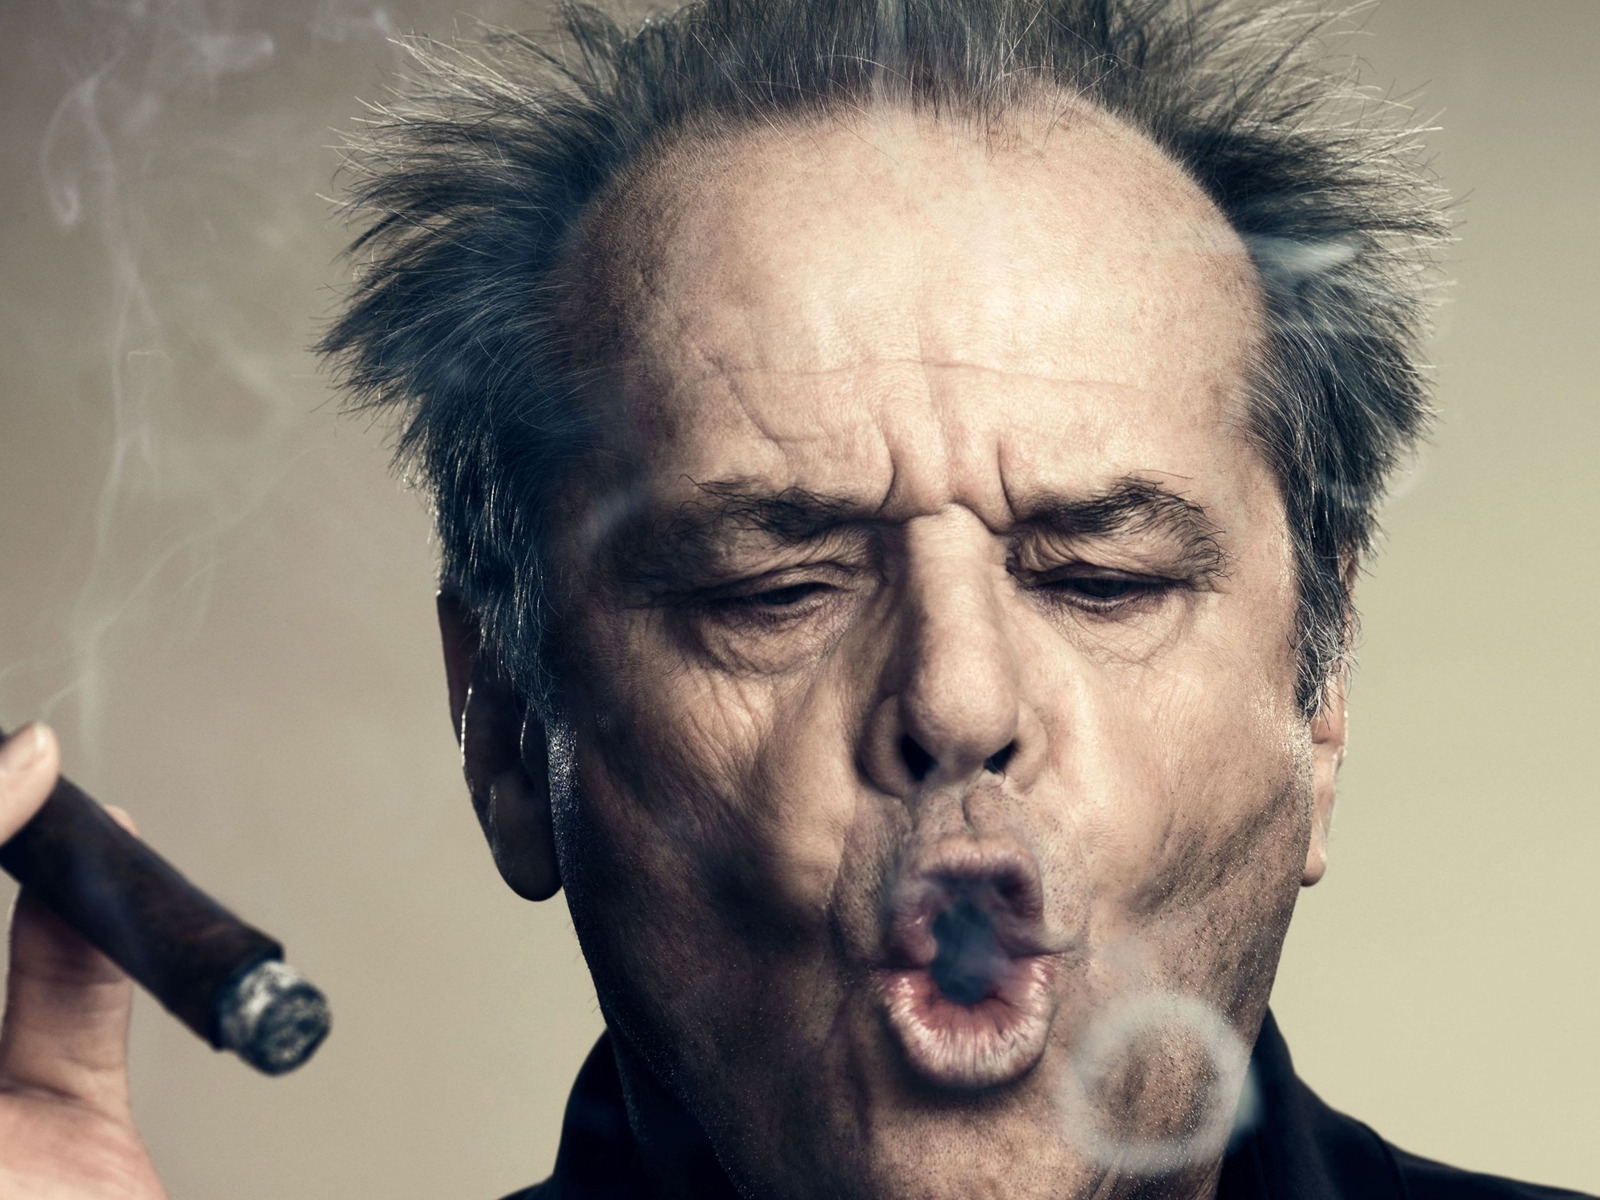 Jack Nicholson for 1600 x 1200 resolution